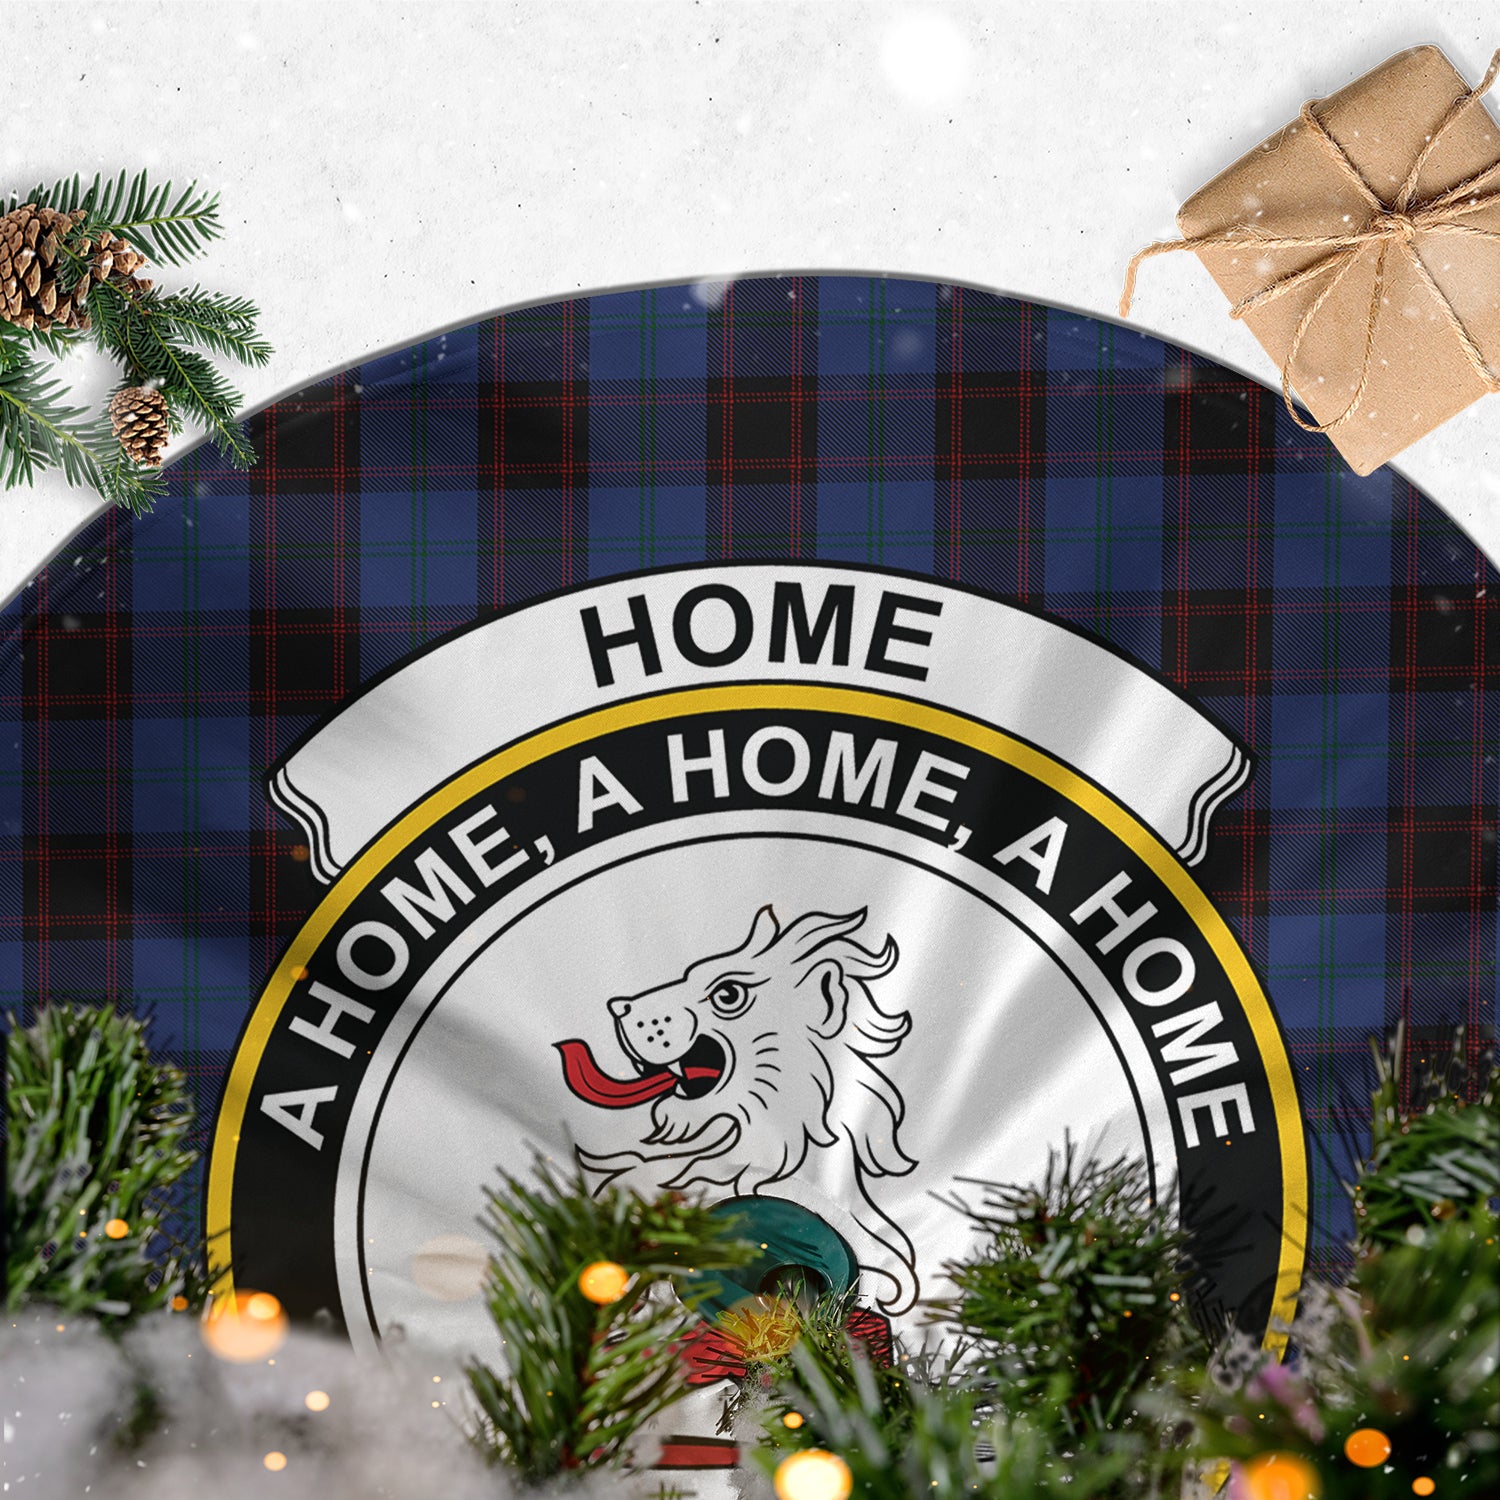 Home (Hume) Tartan Christmas Tree Skirt with Family Crest - Tartanvibesclothing